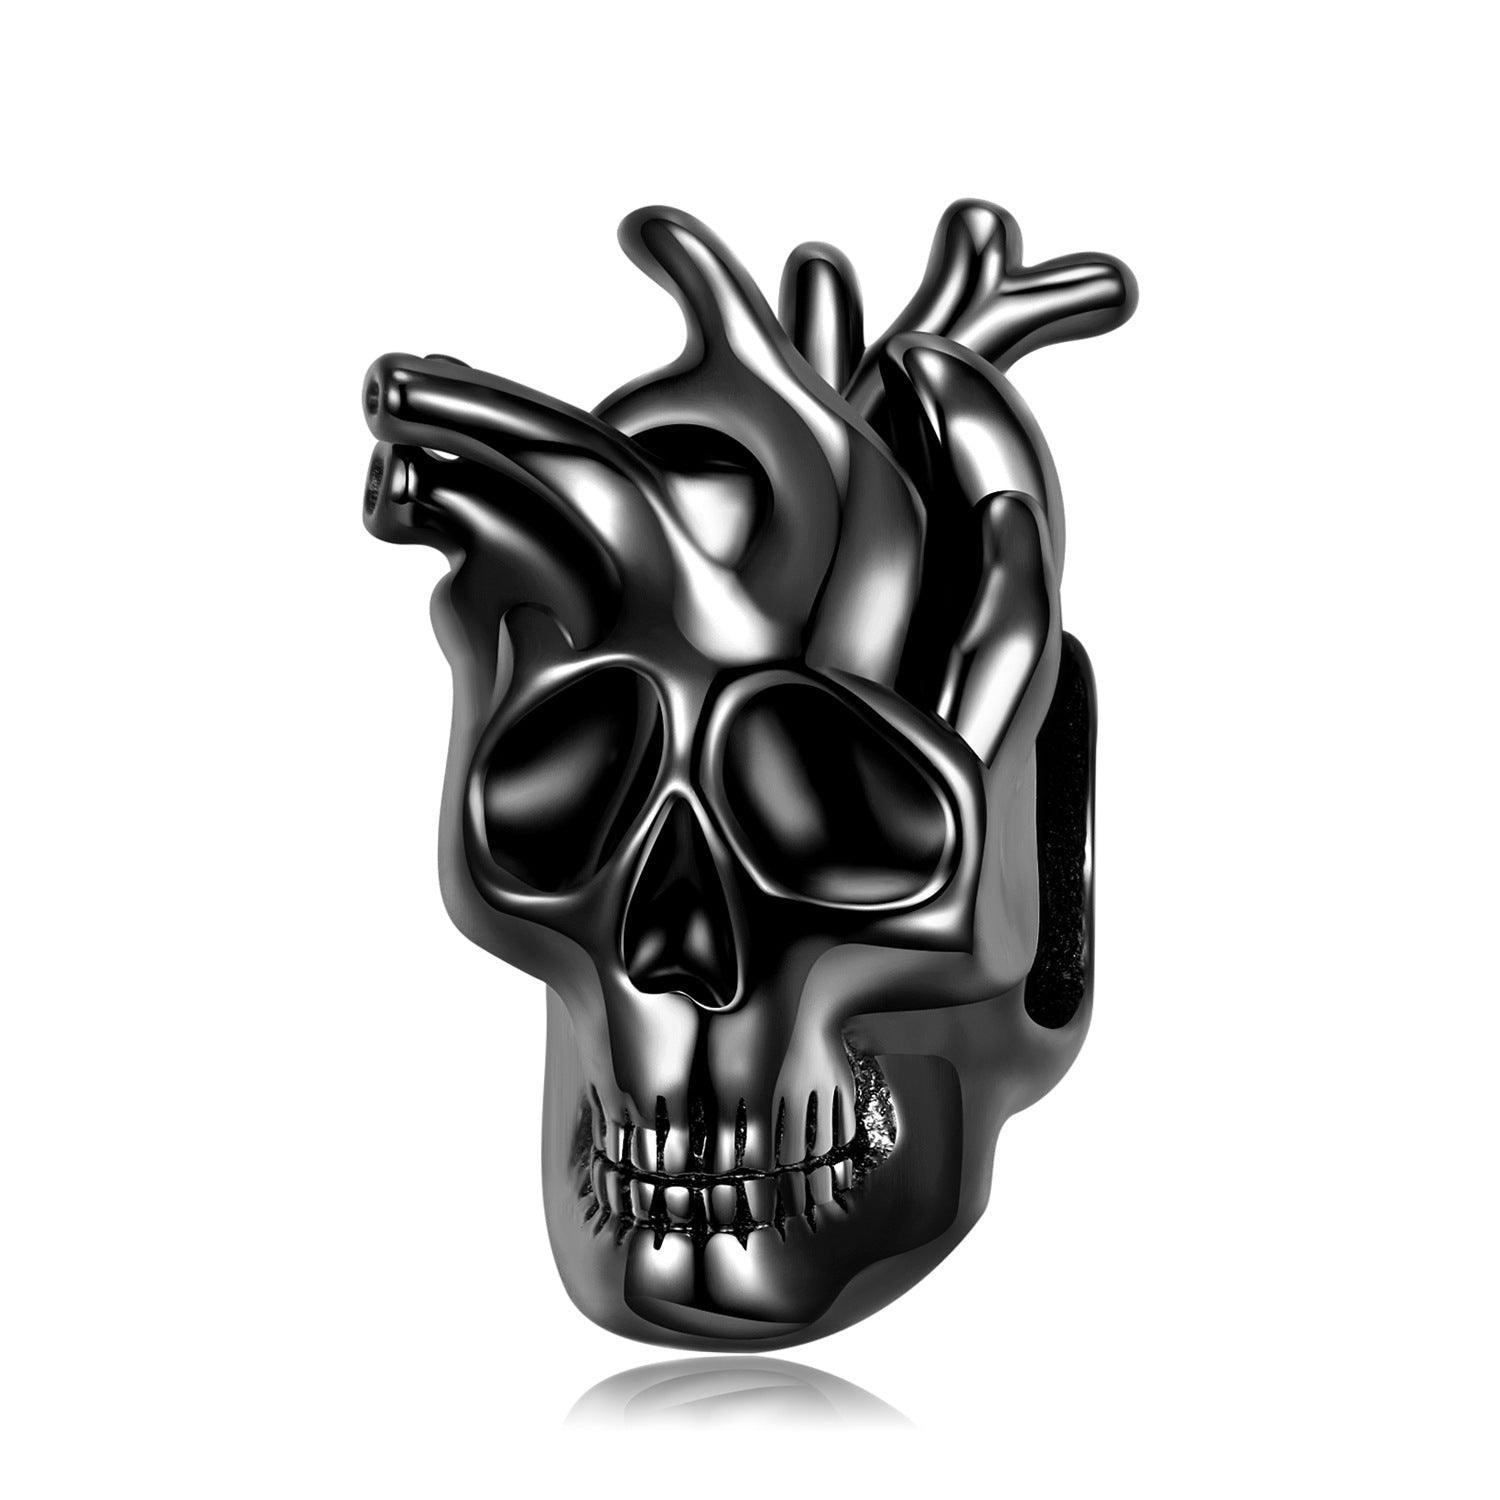 S925 Silver Skull Series Beaded Charms & Pendants in 2023 | S925 Silver Skull Series Beaded Charms & Pendants - undefined | cute charm bracelets, Halloween Charms & Pendants, S925 Silver Charms & Pendants, Skull Series Beaded Charms | From Hunny Life | hunnylife.com